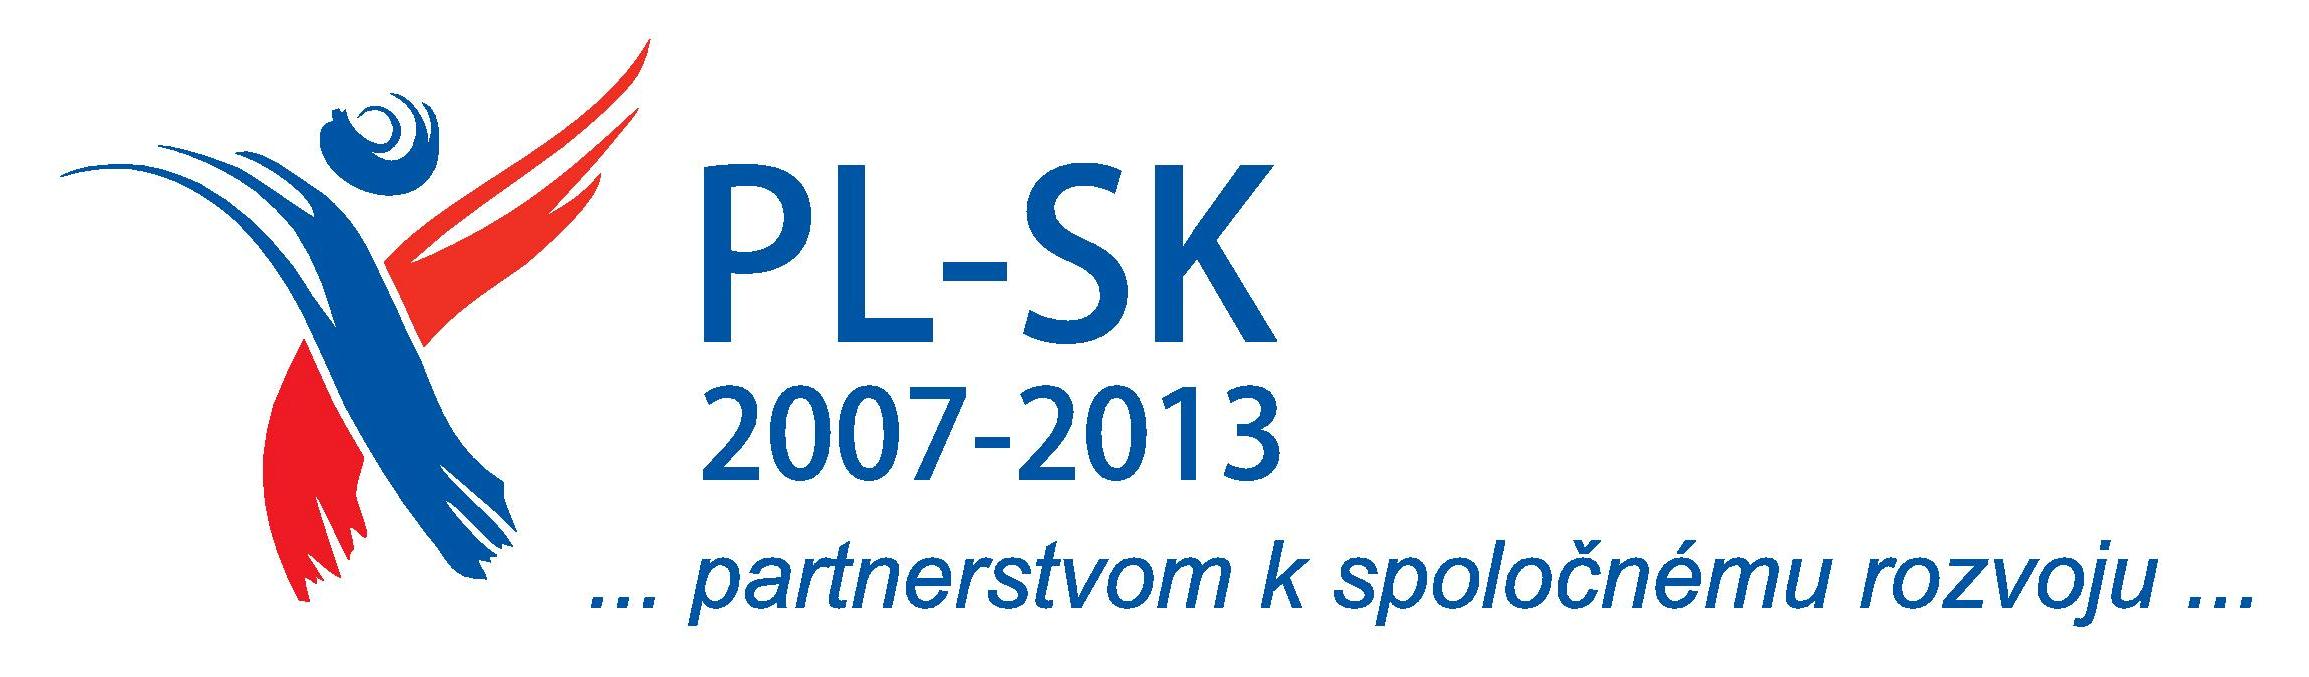 logo_programu_poziom+slogan_SK-page-001